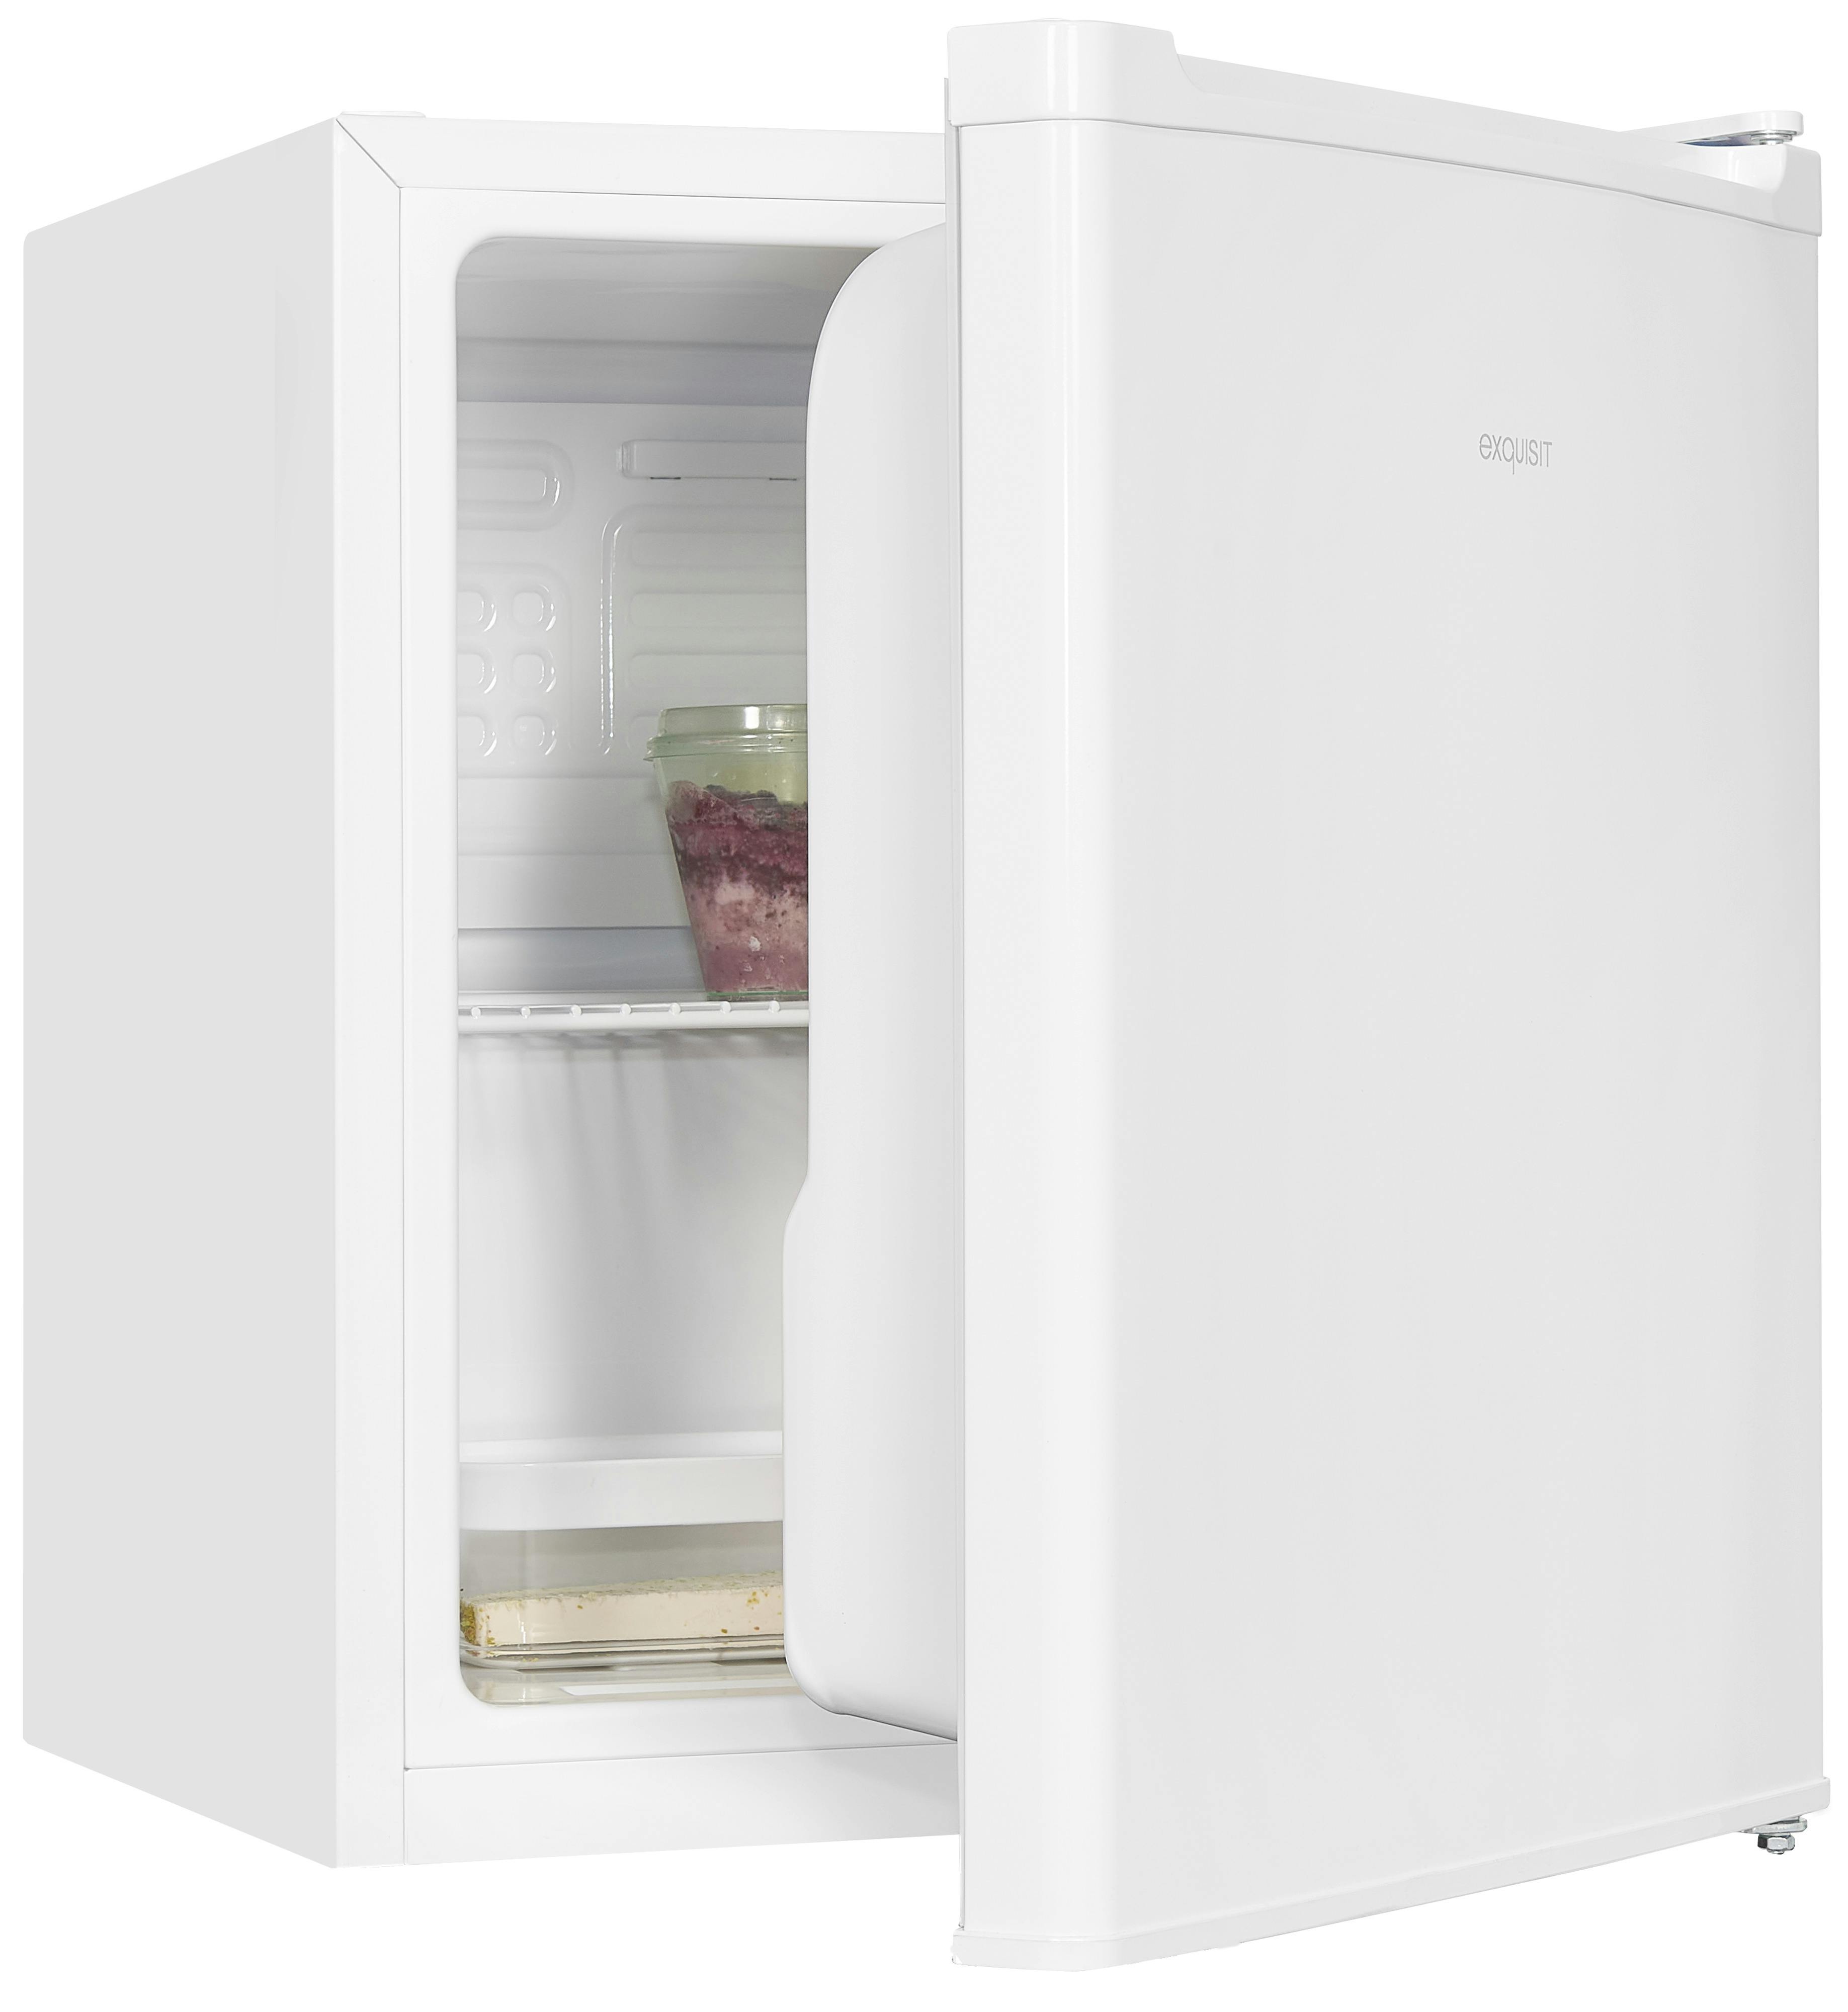 Exquisit Mini Kühlschrank KB505-V-040E weiss